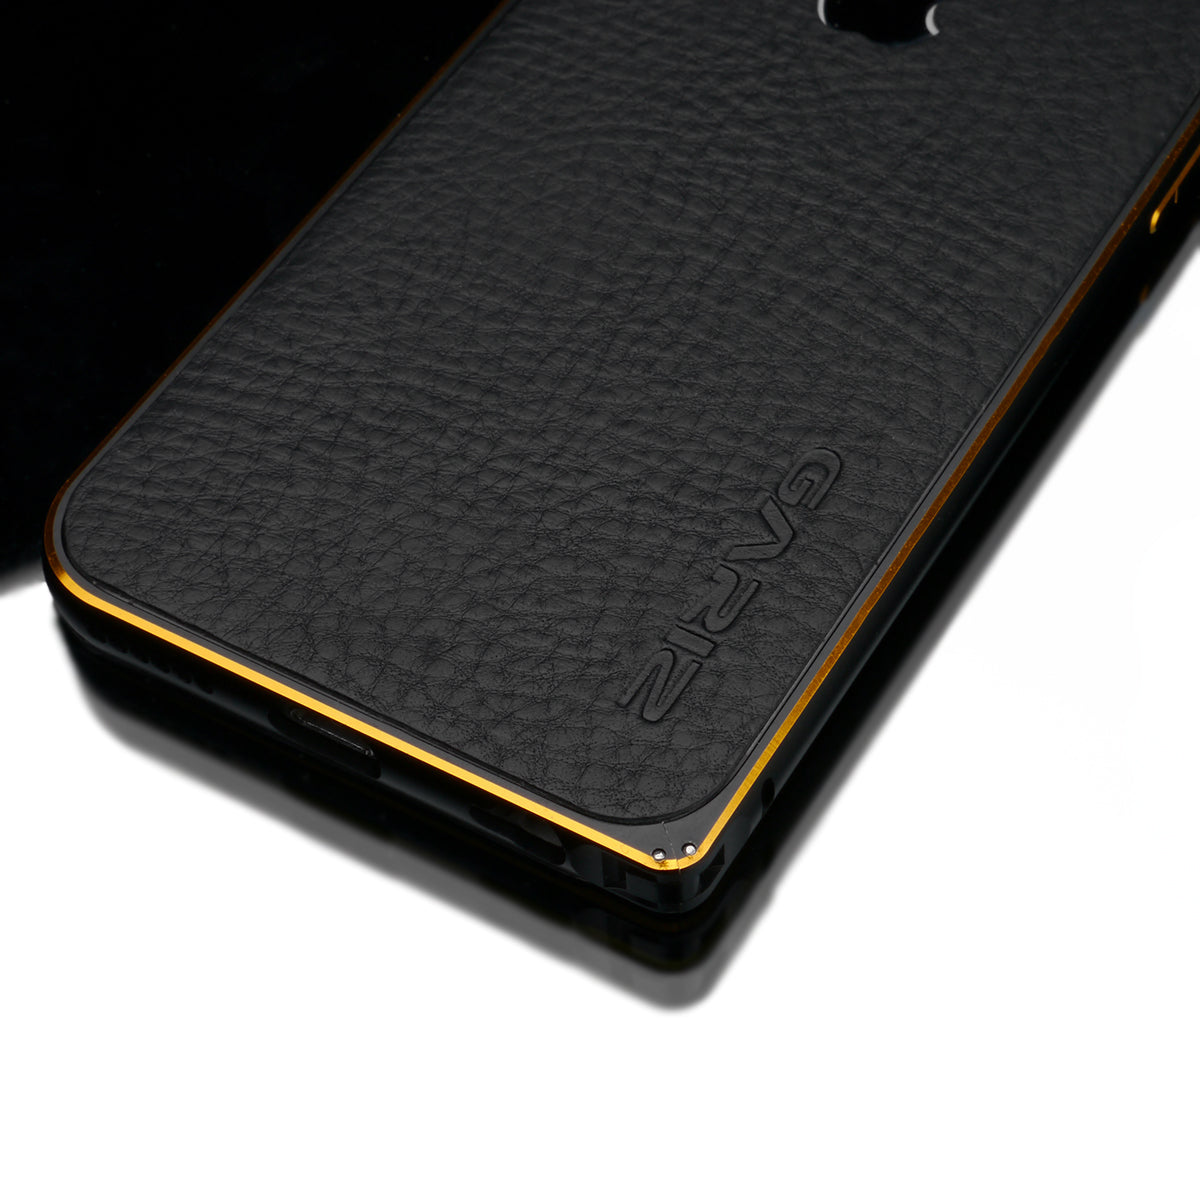 Gariz XA-IP6BS Metal Bumper Case Leather Skin for iPhone 6 6S Black Gold Trim